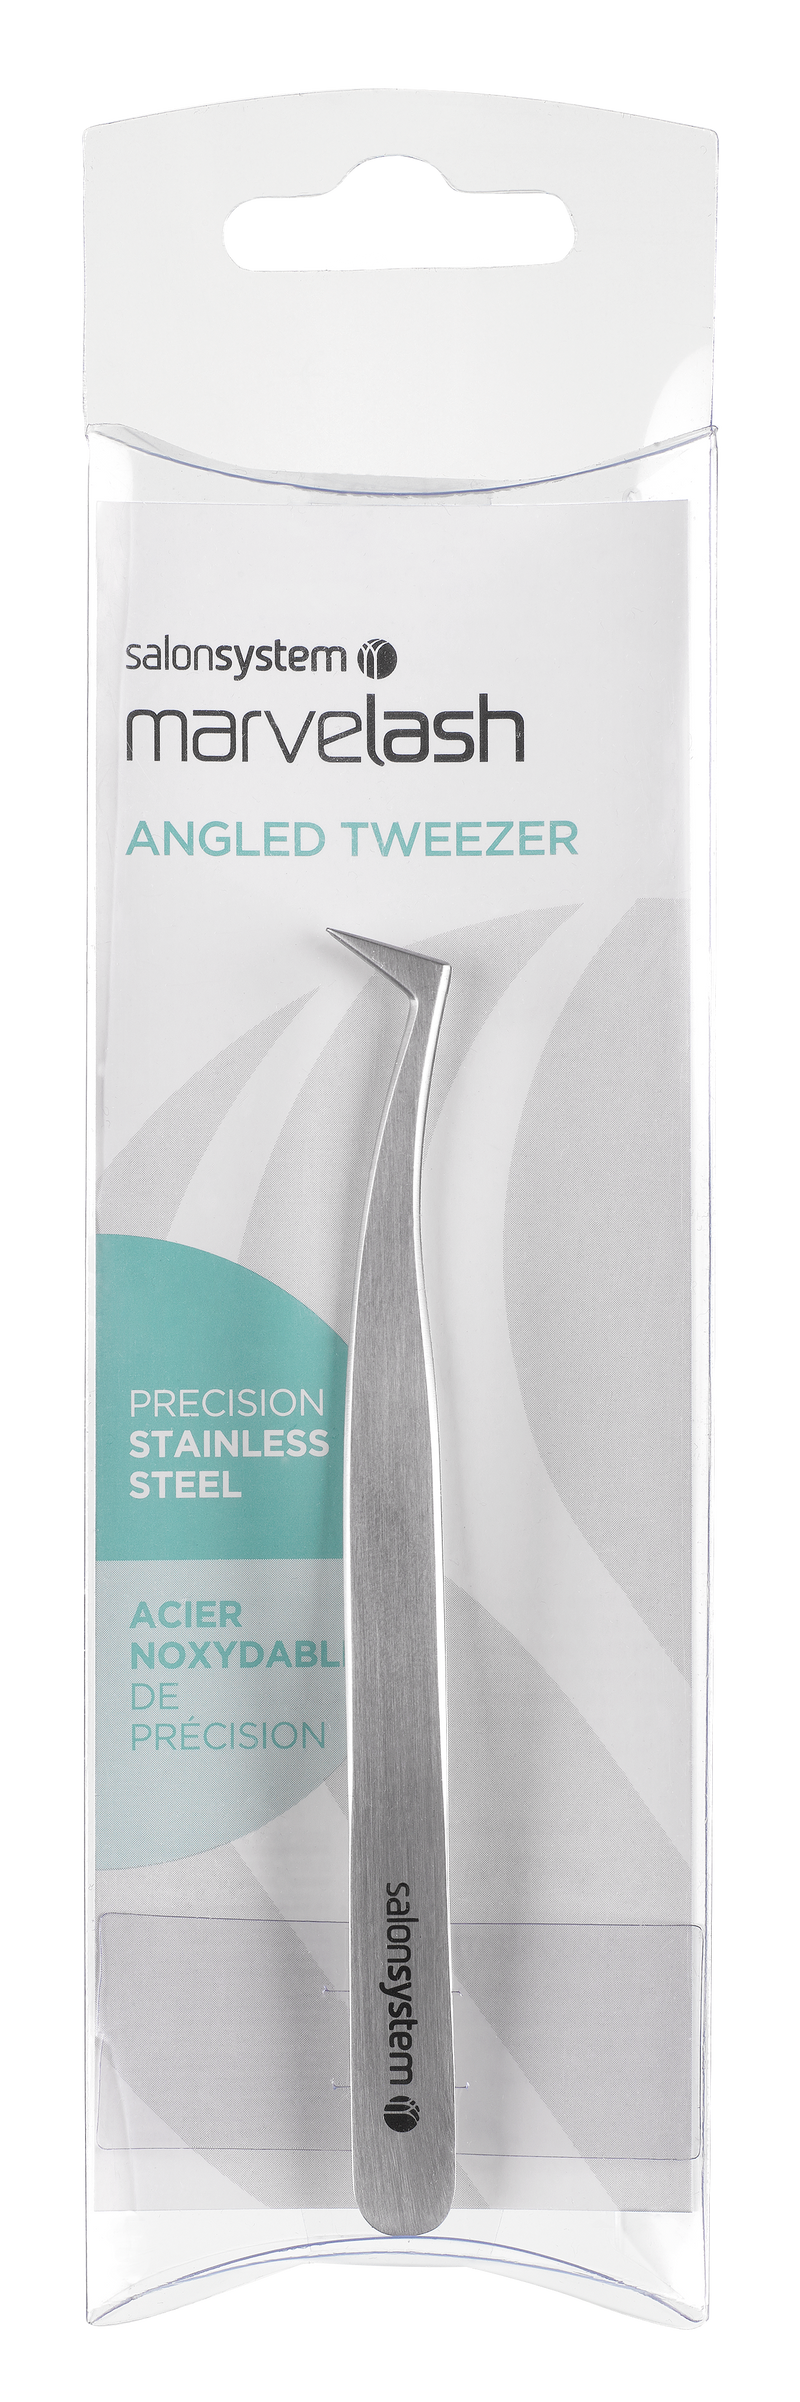 Marvelash Angled Tweezers